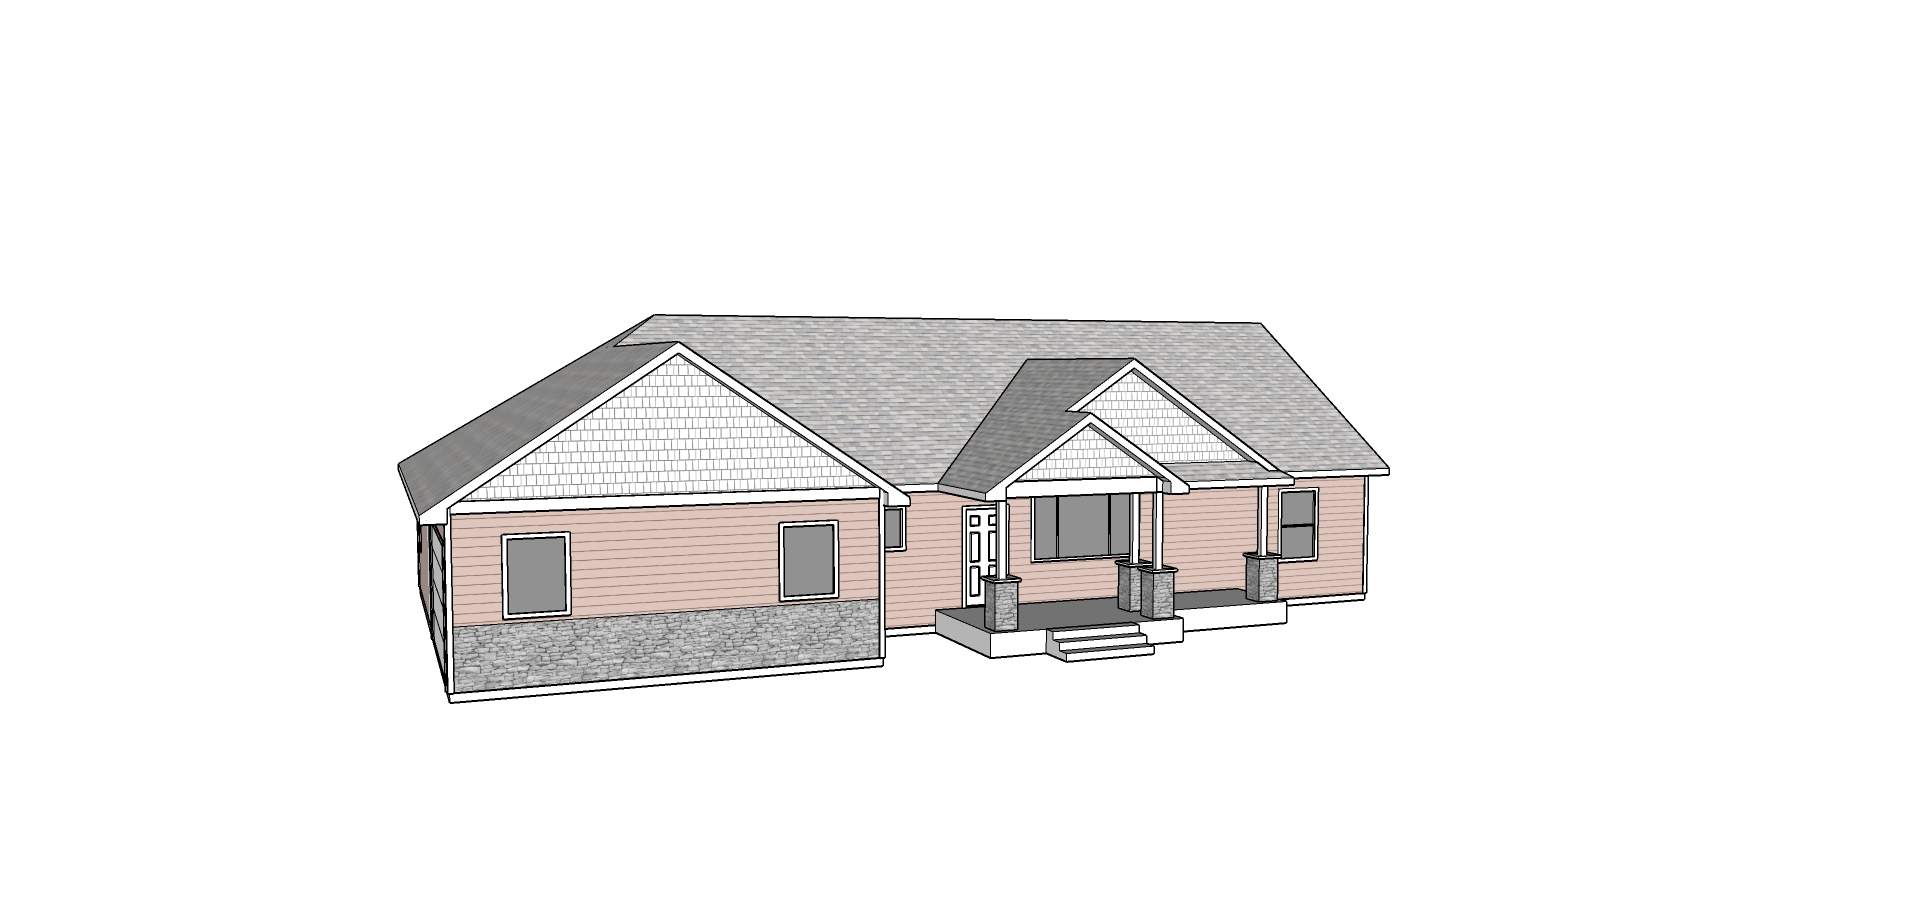 Front view of a one level Spokane House Plan by Spokane Home Design.